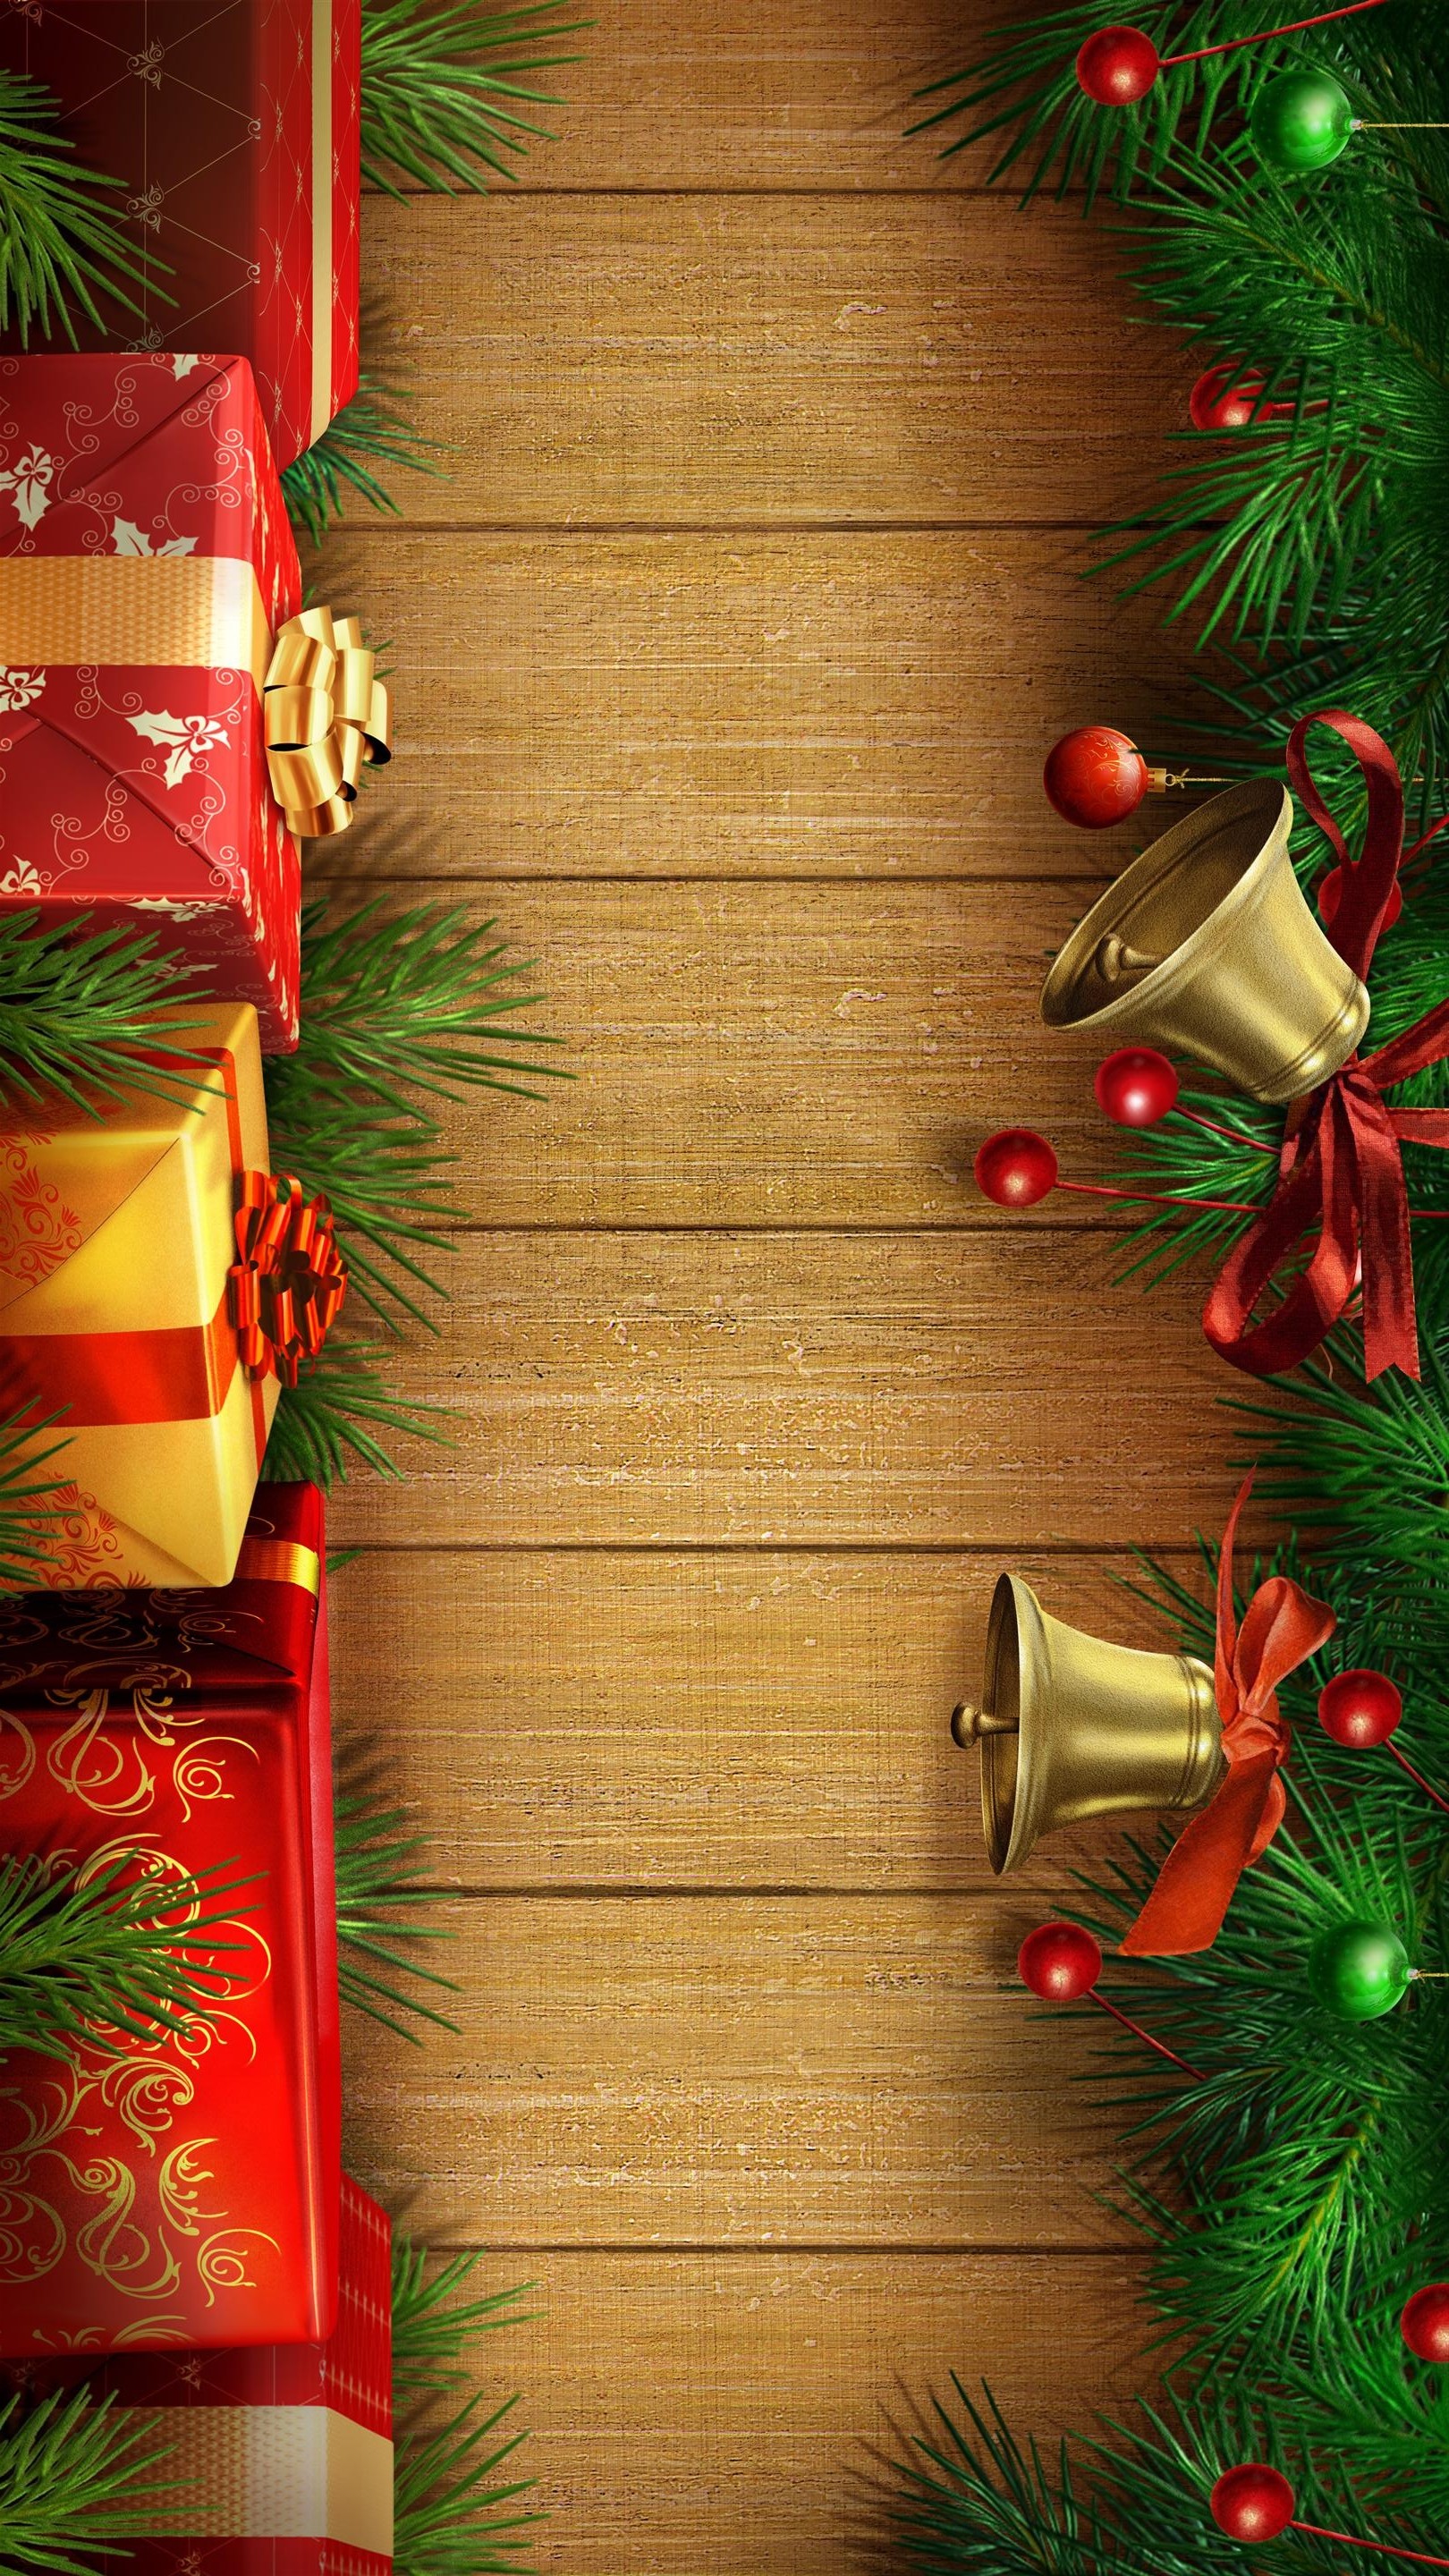 navidad fondos de pantalla hd iphone,decoración navideña,decoración navideña,navidad,árbol,abeto